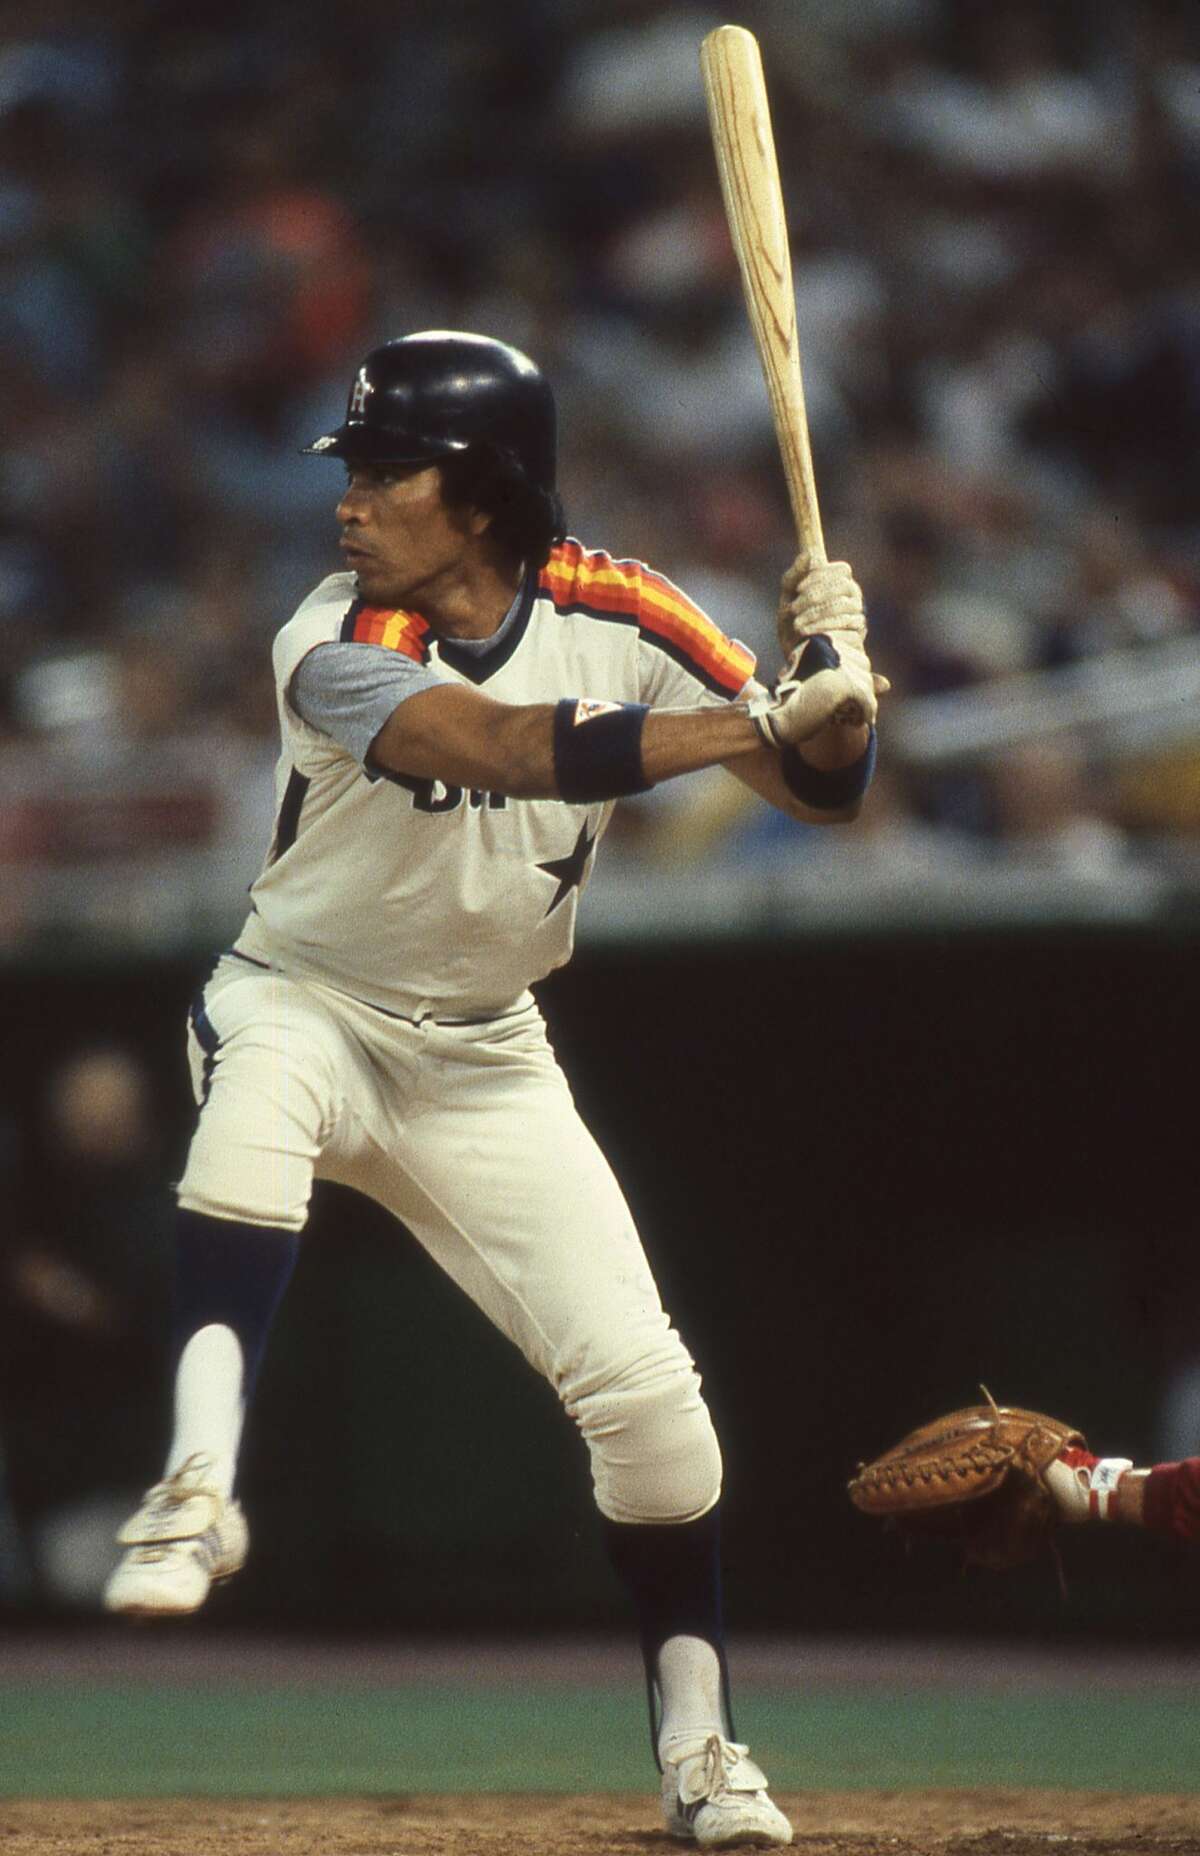 Jose Cruz of the Houstons Astros circa 1983 bats against the Philadelphia Phillies at Veterans Stadium in Philadelphia, Pennsylvania.